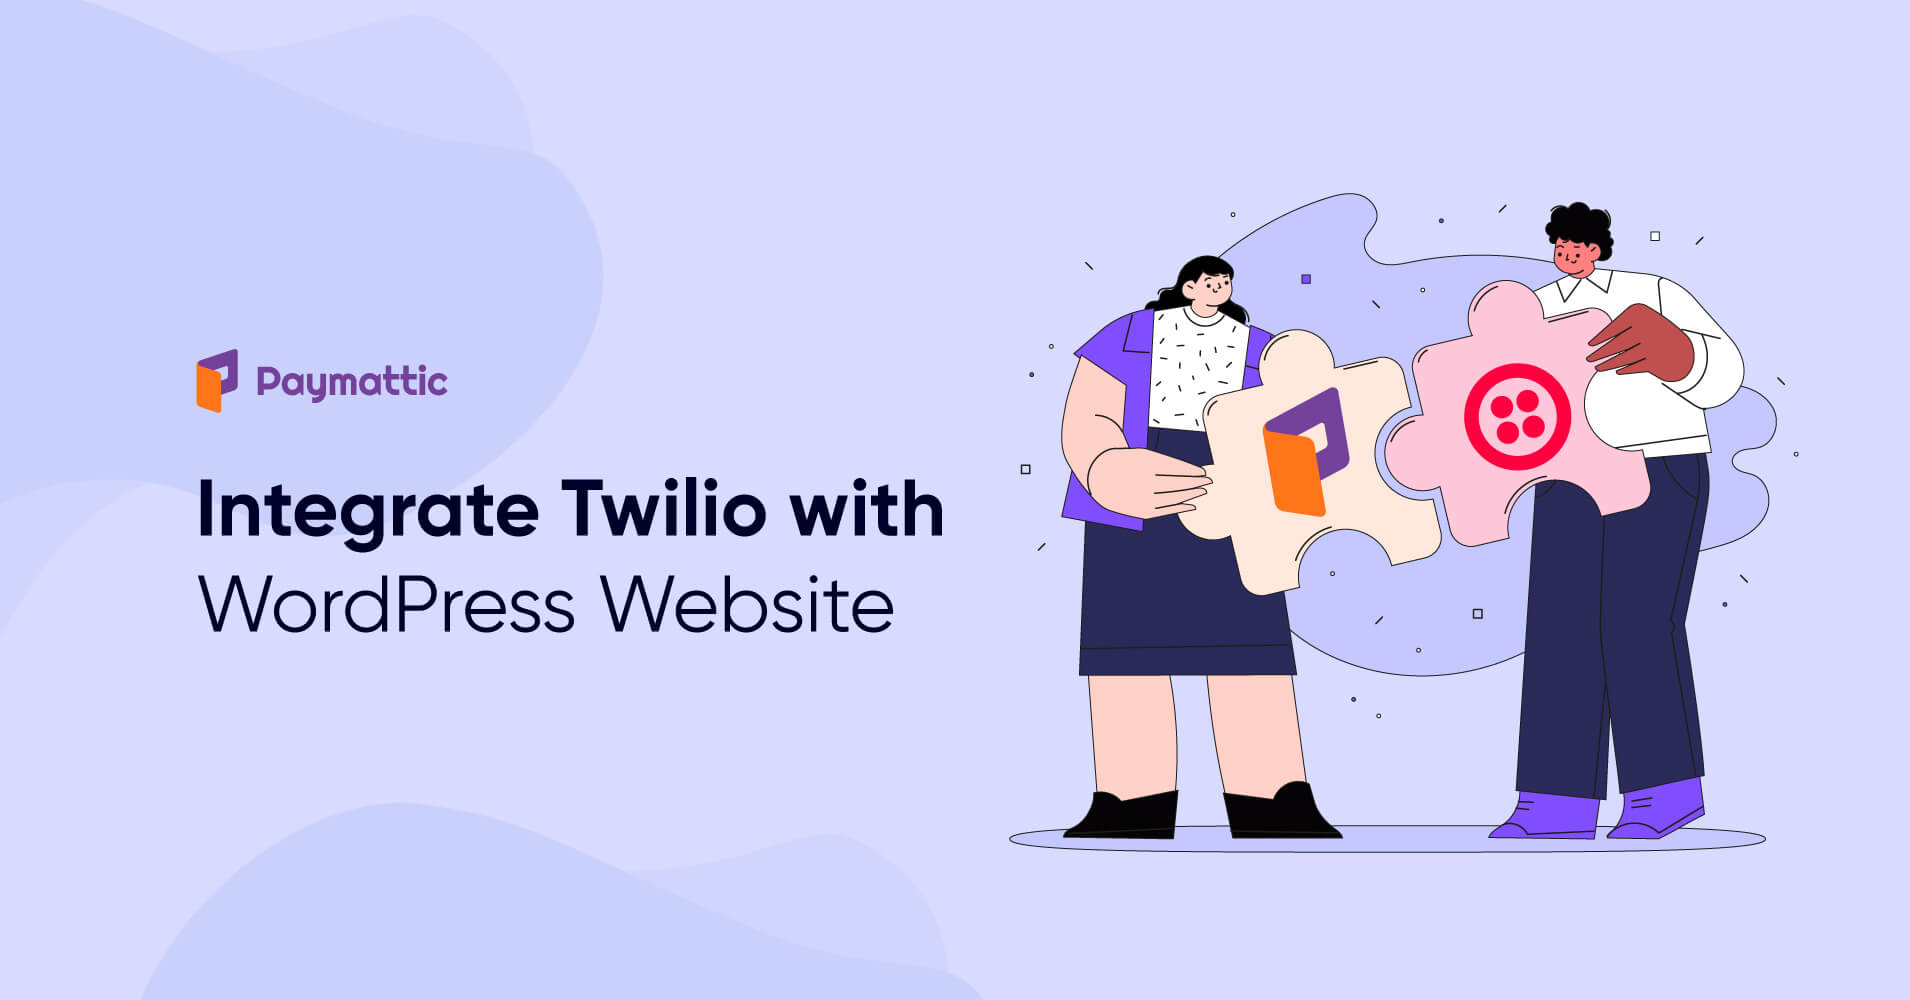 How to Integrate Twilio with WordPress Website?